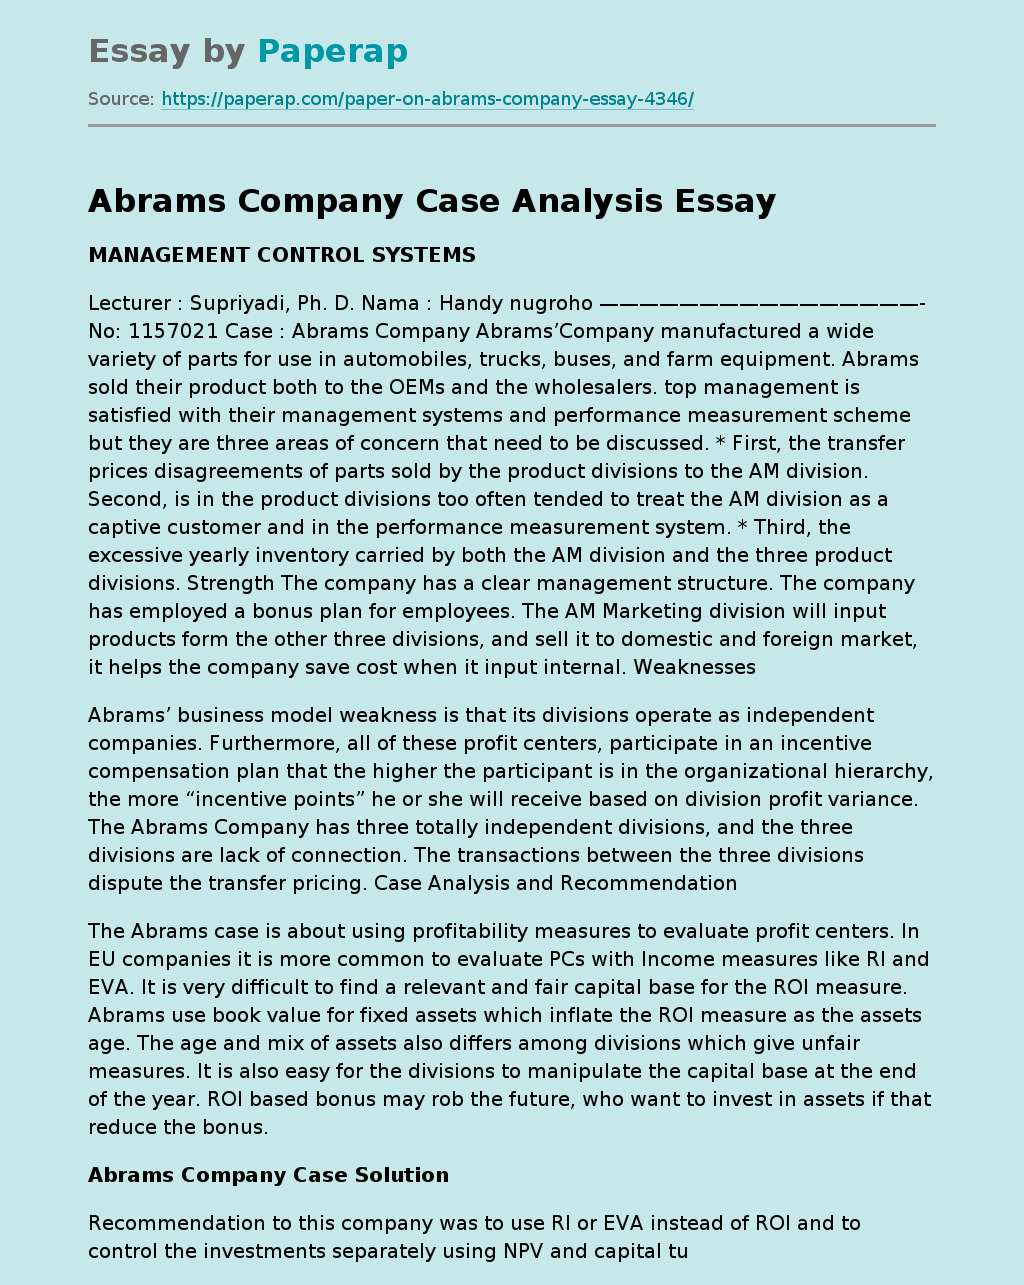 Abrams Company Case Analysis